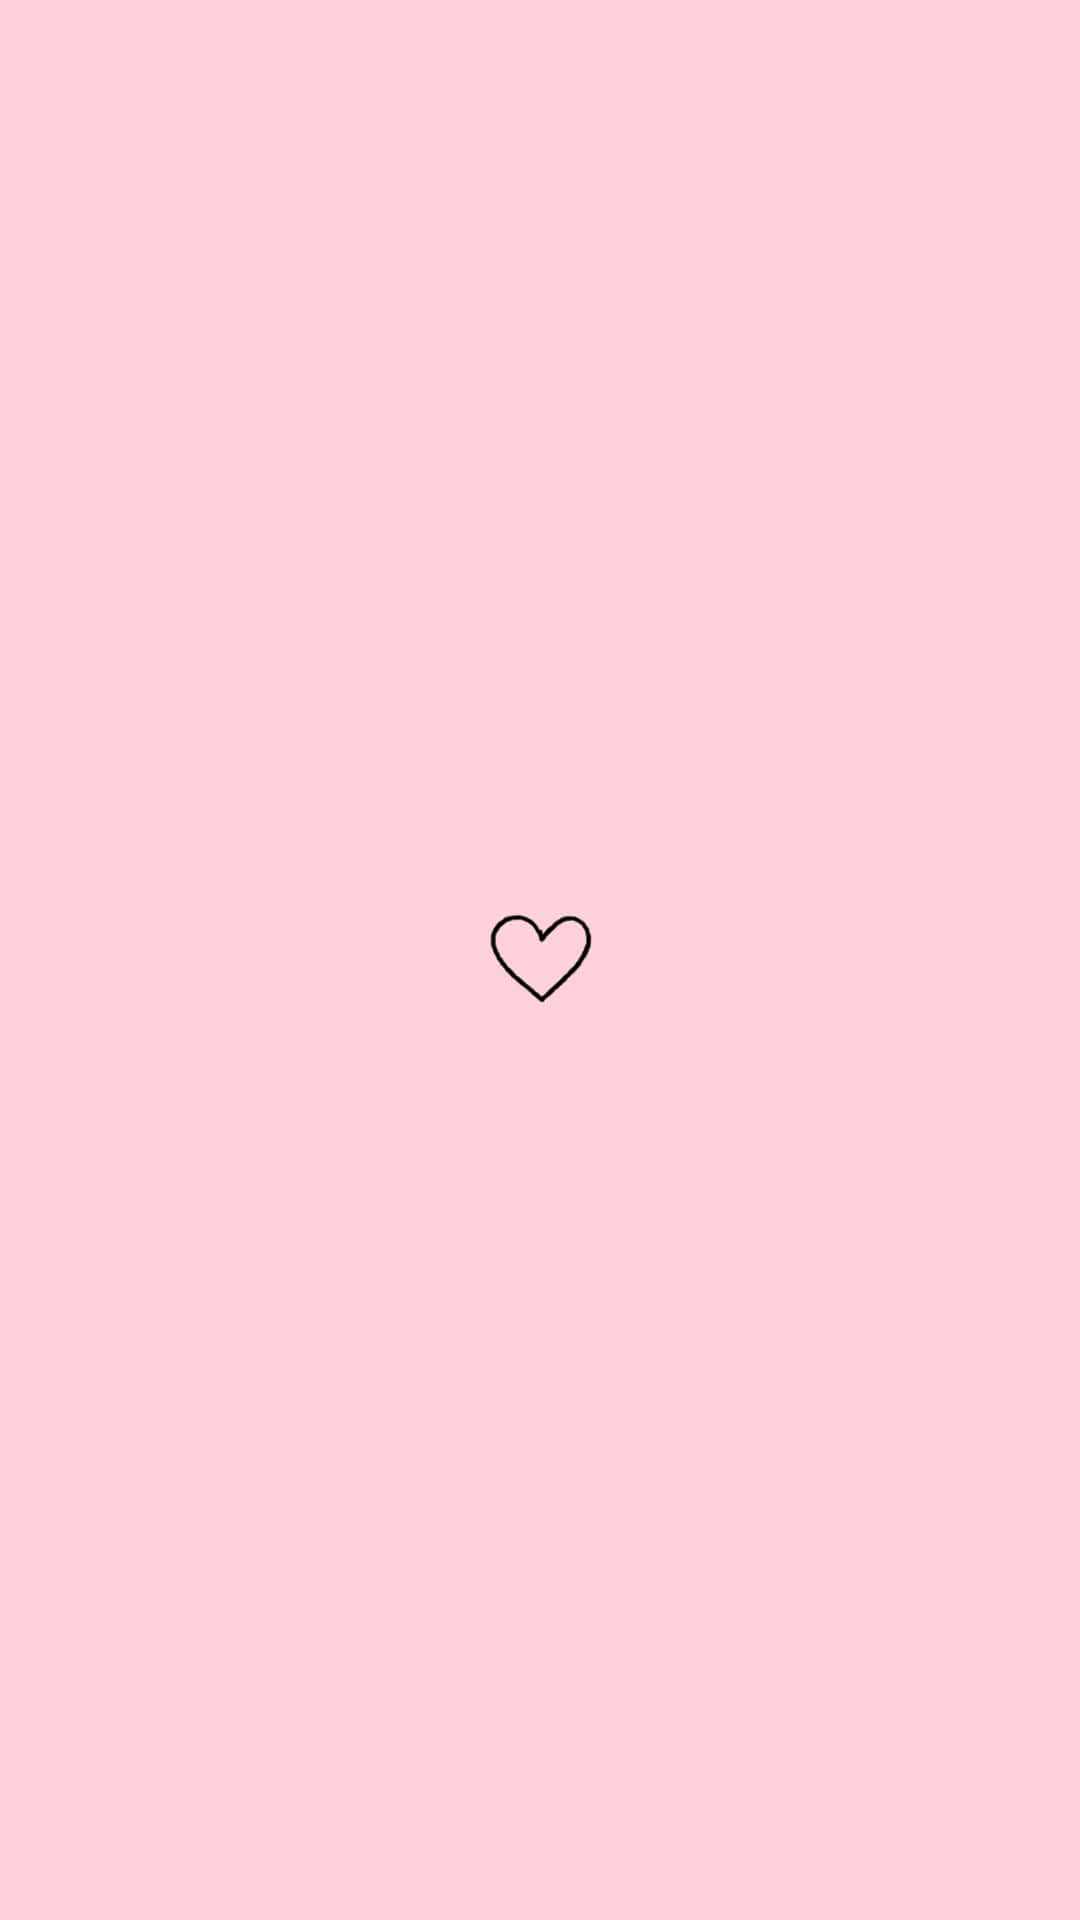 Aesthetic Instagram Minimalist Heart Wallpaper